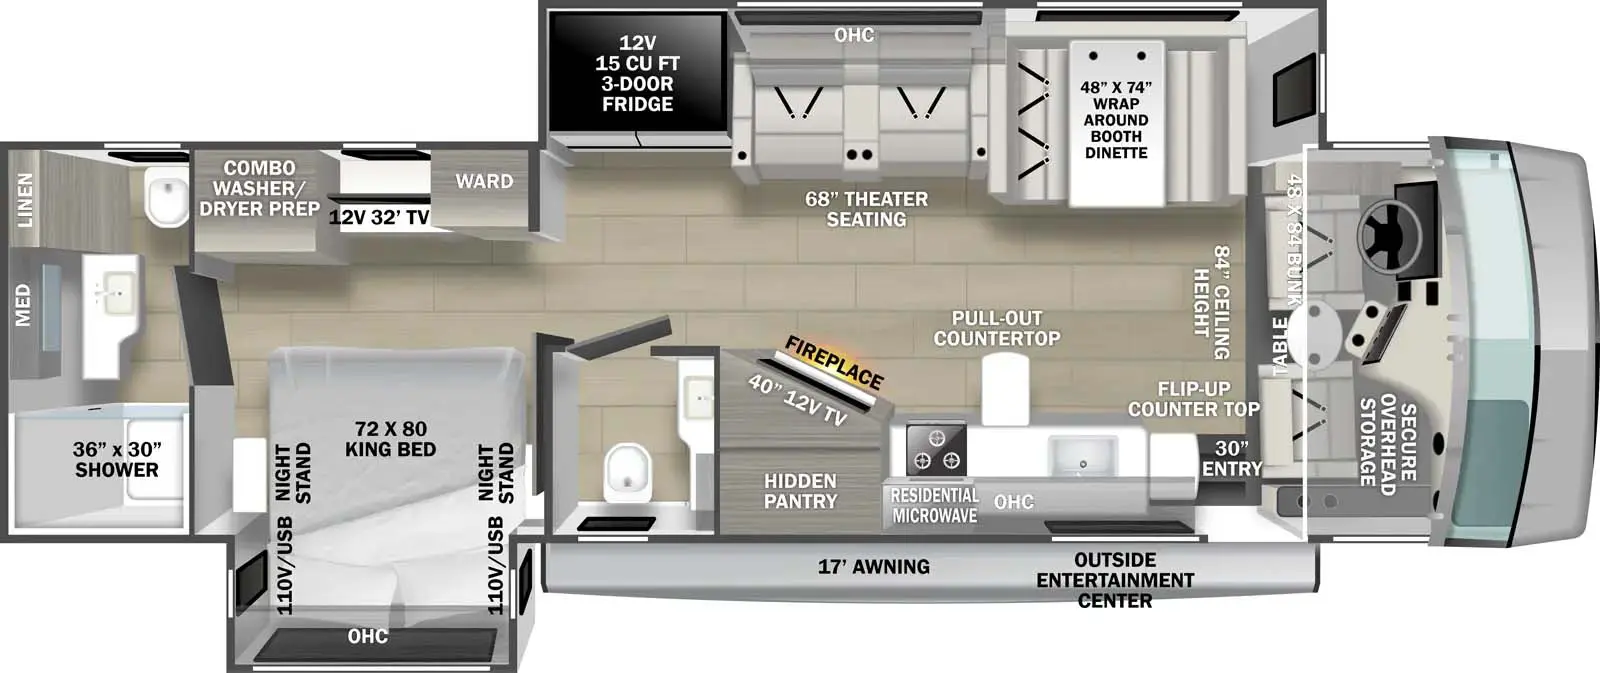 34DS Floorplan Image